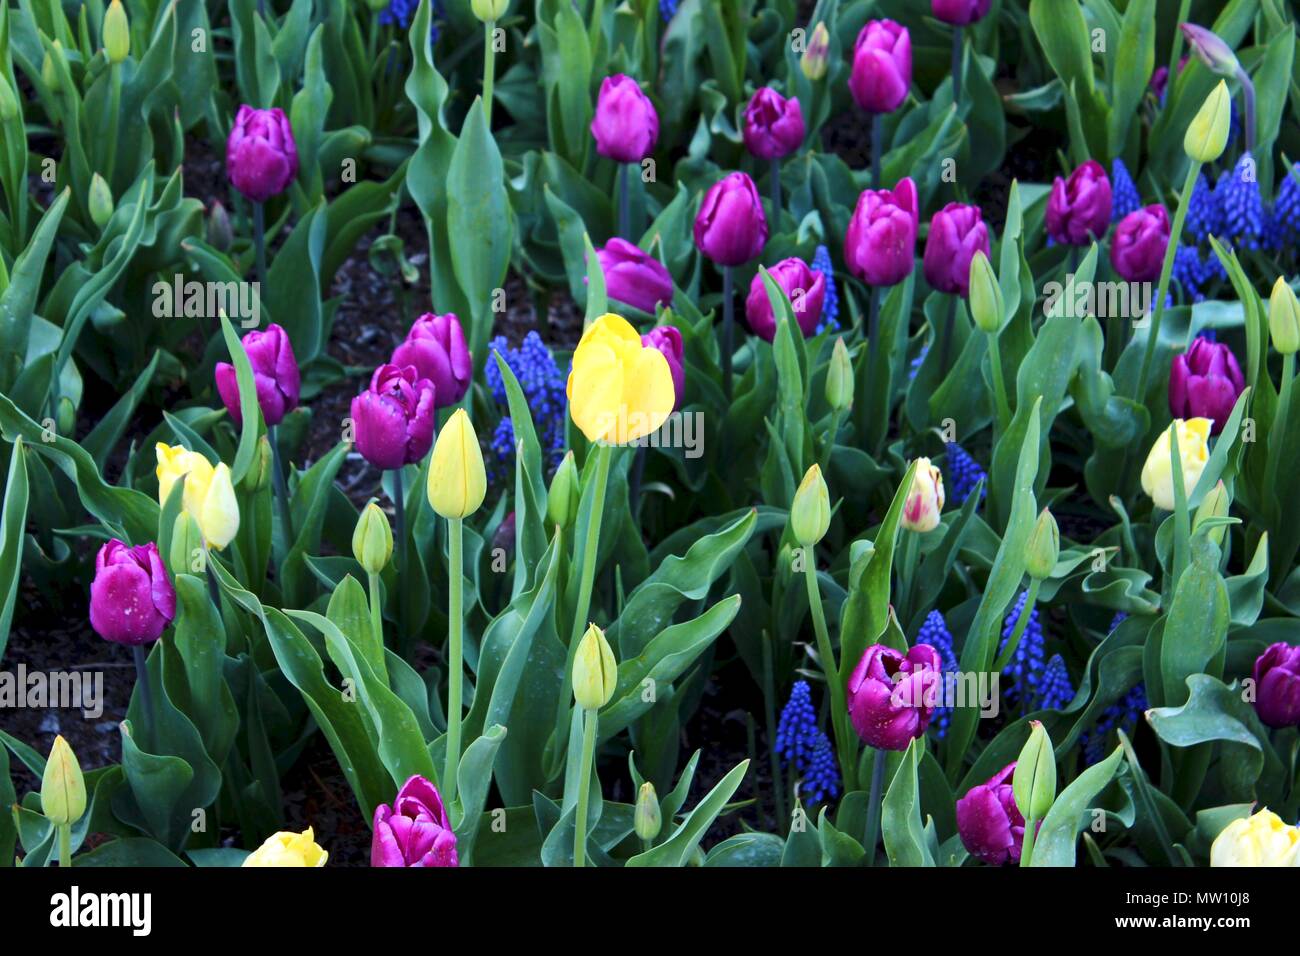 A field of multicolored tulips Stock Photo